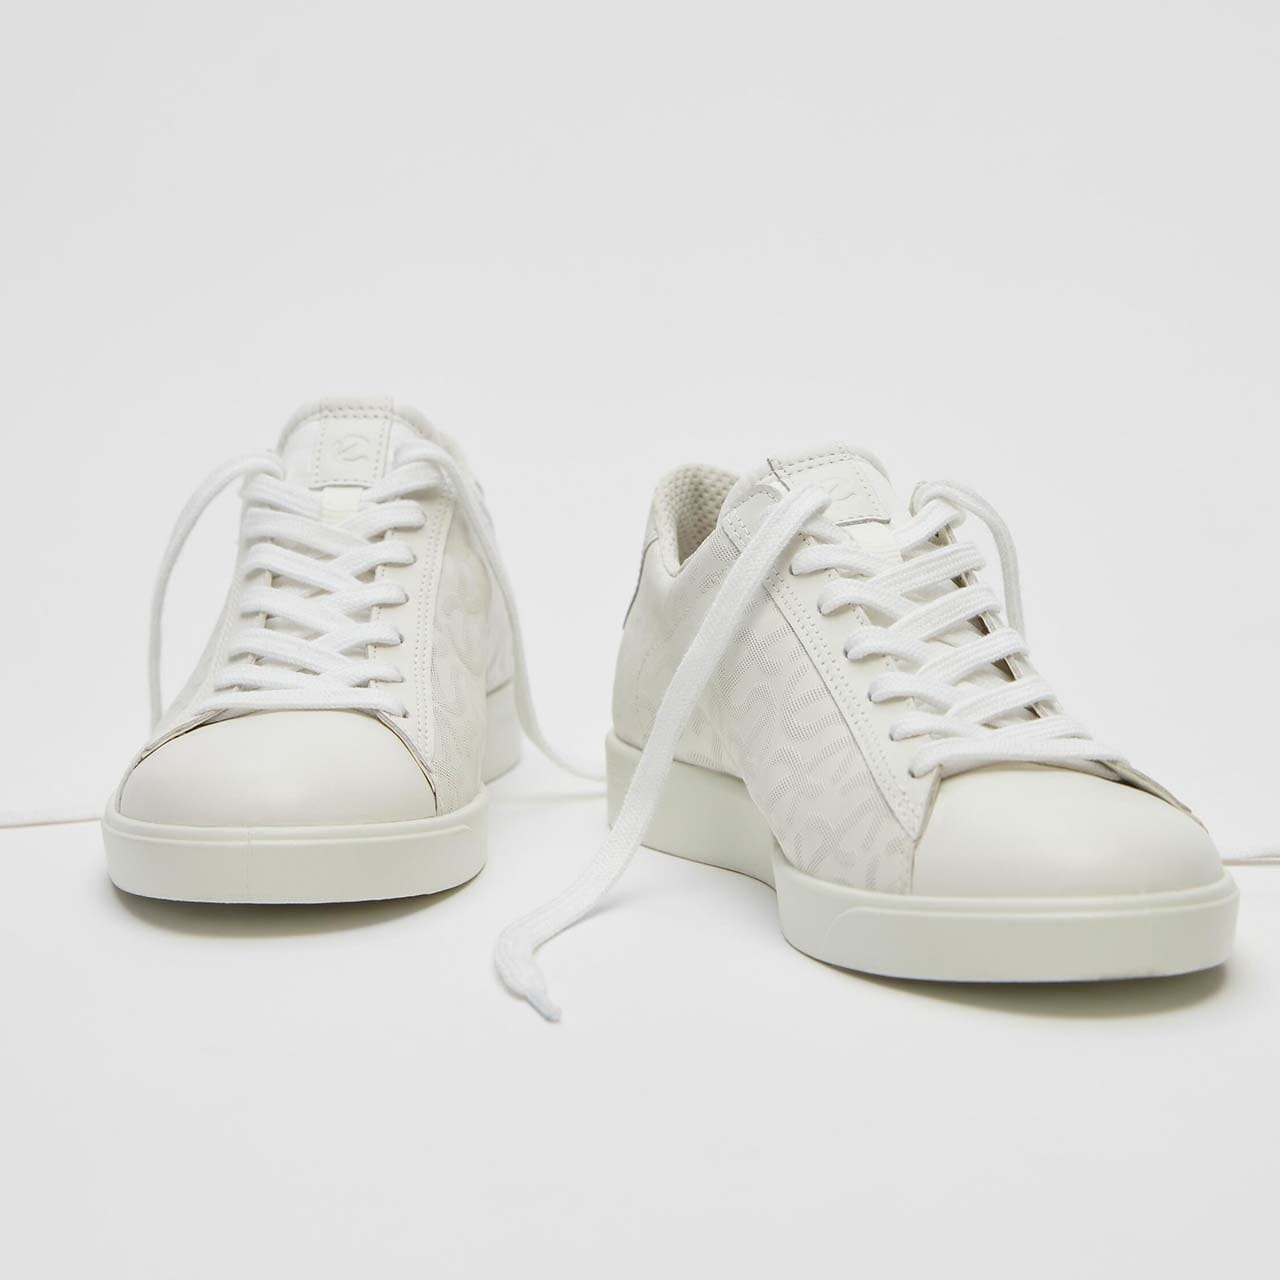 Pair of white sneakers